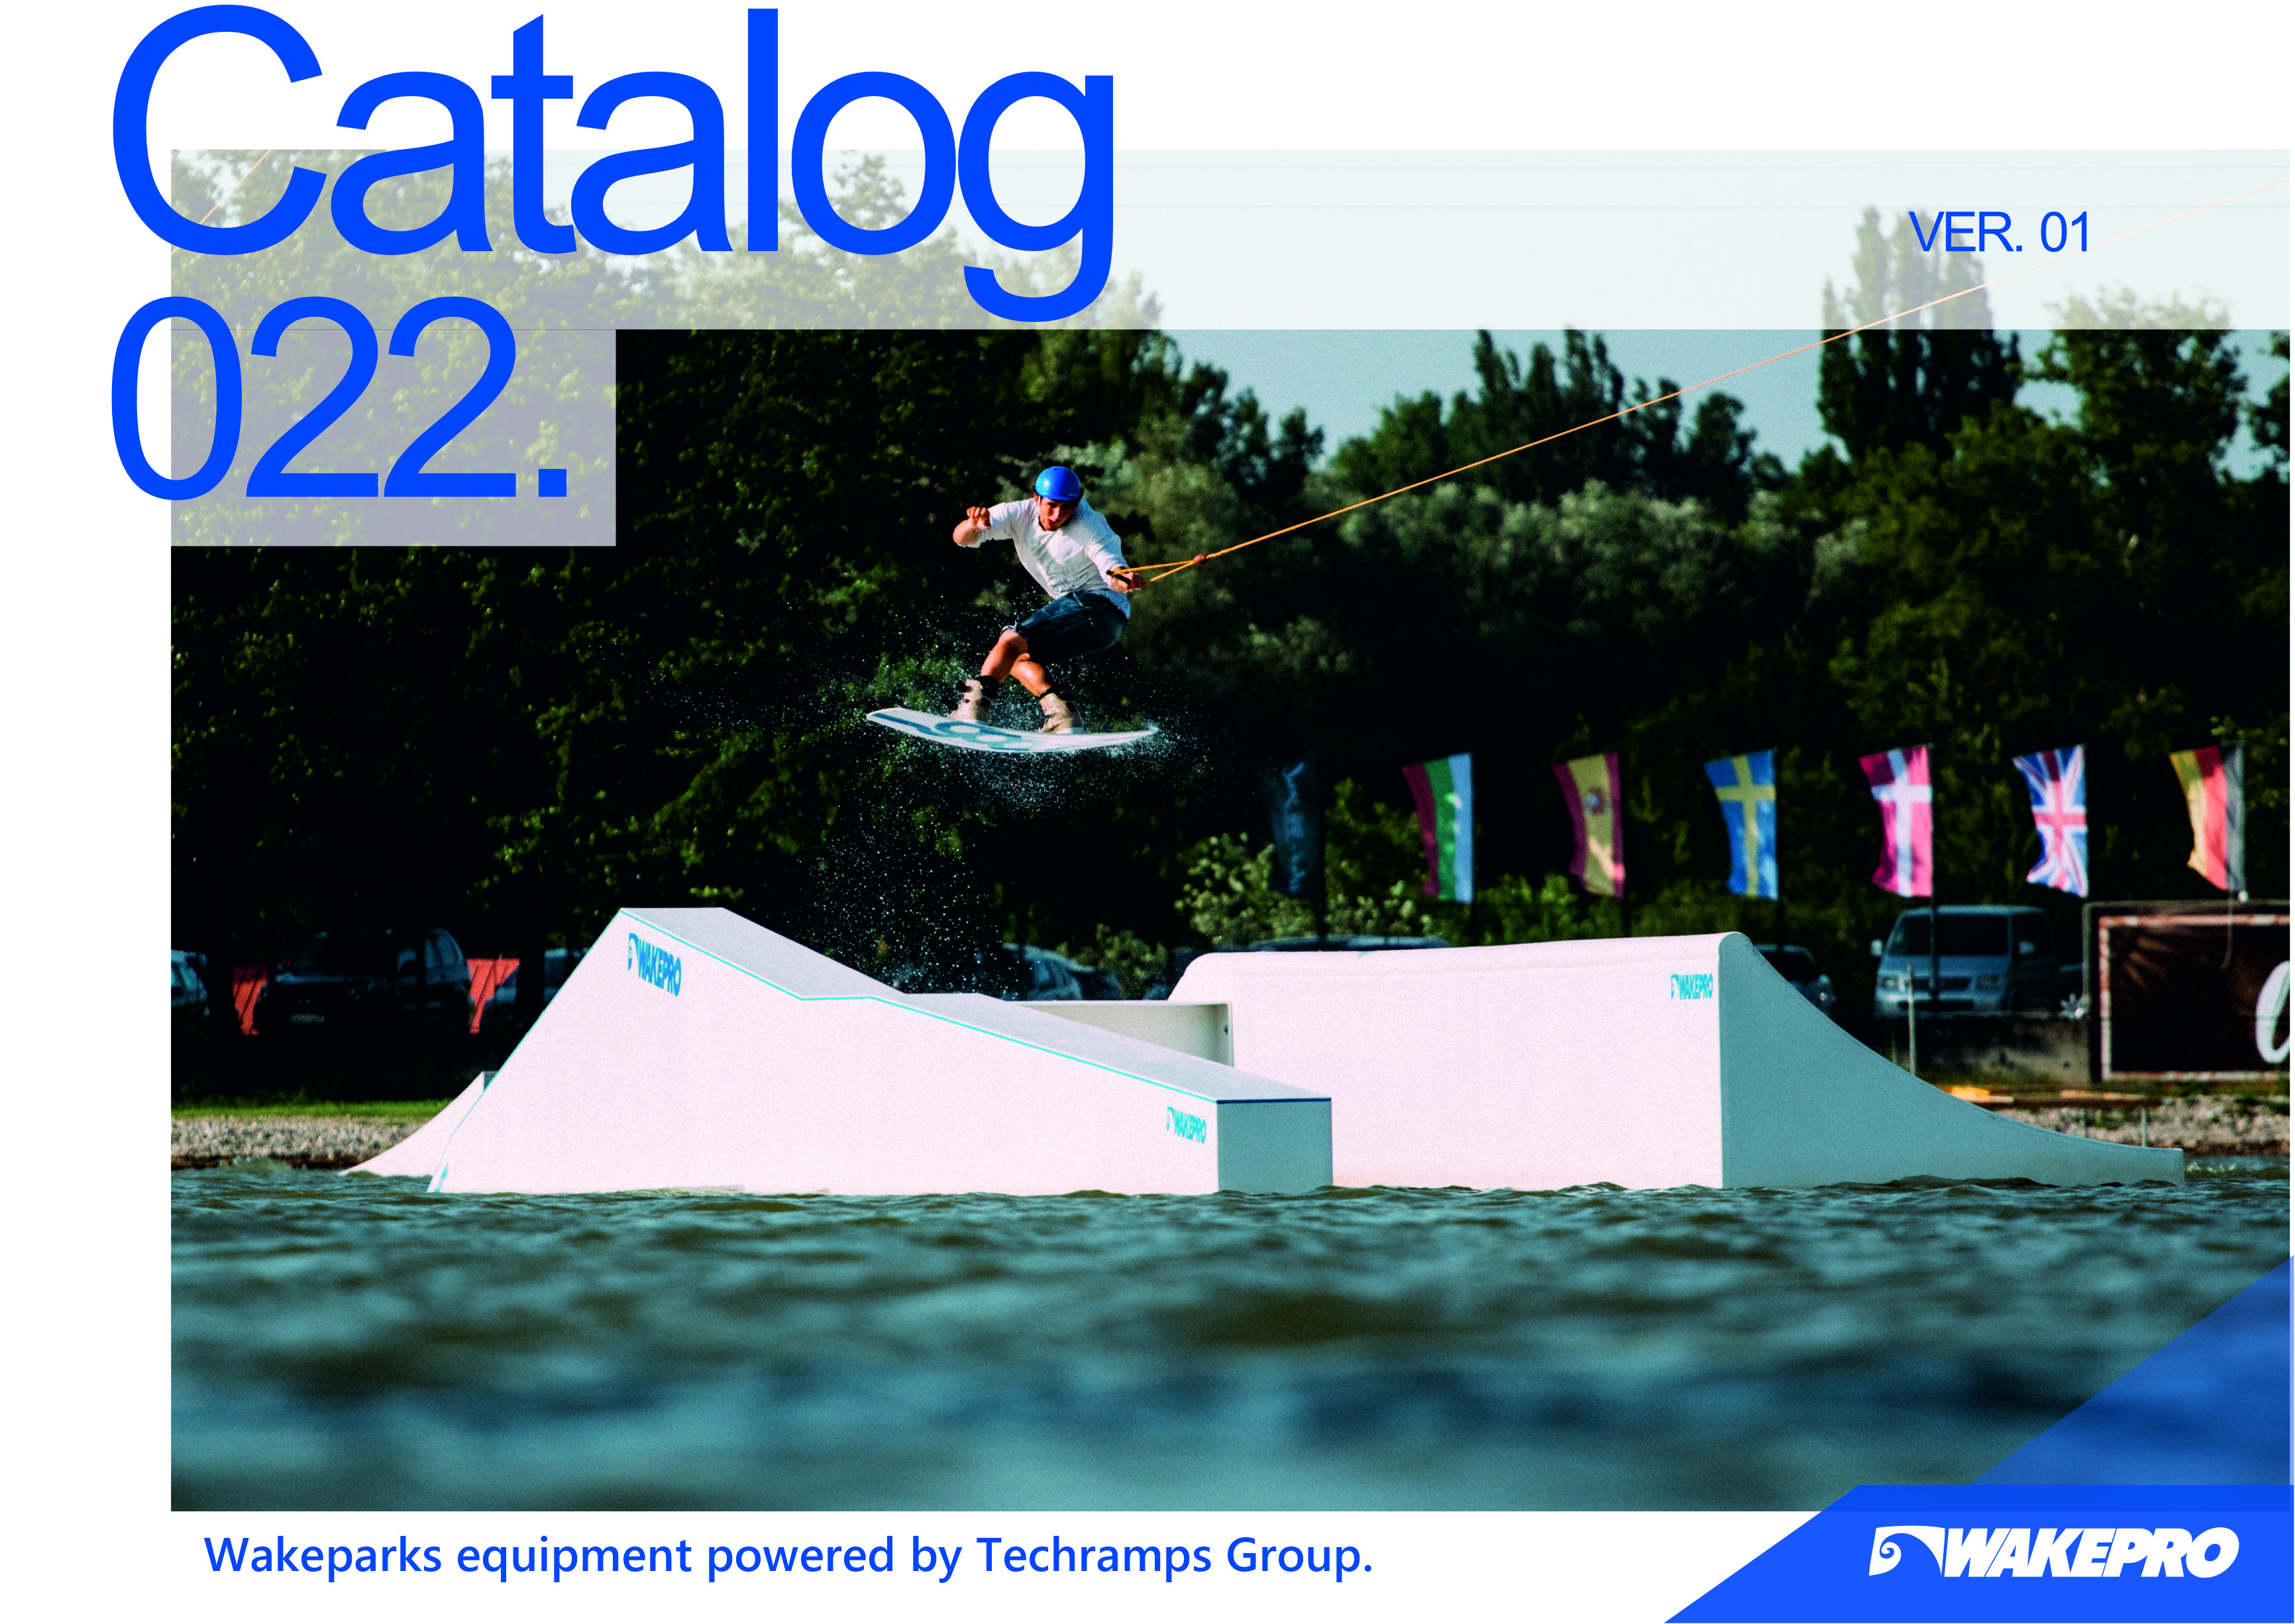 Wakepro catalog 2021 ver 01 - wakepark obstacles 